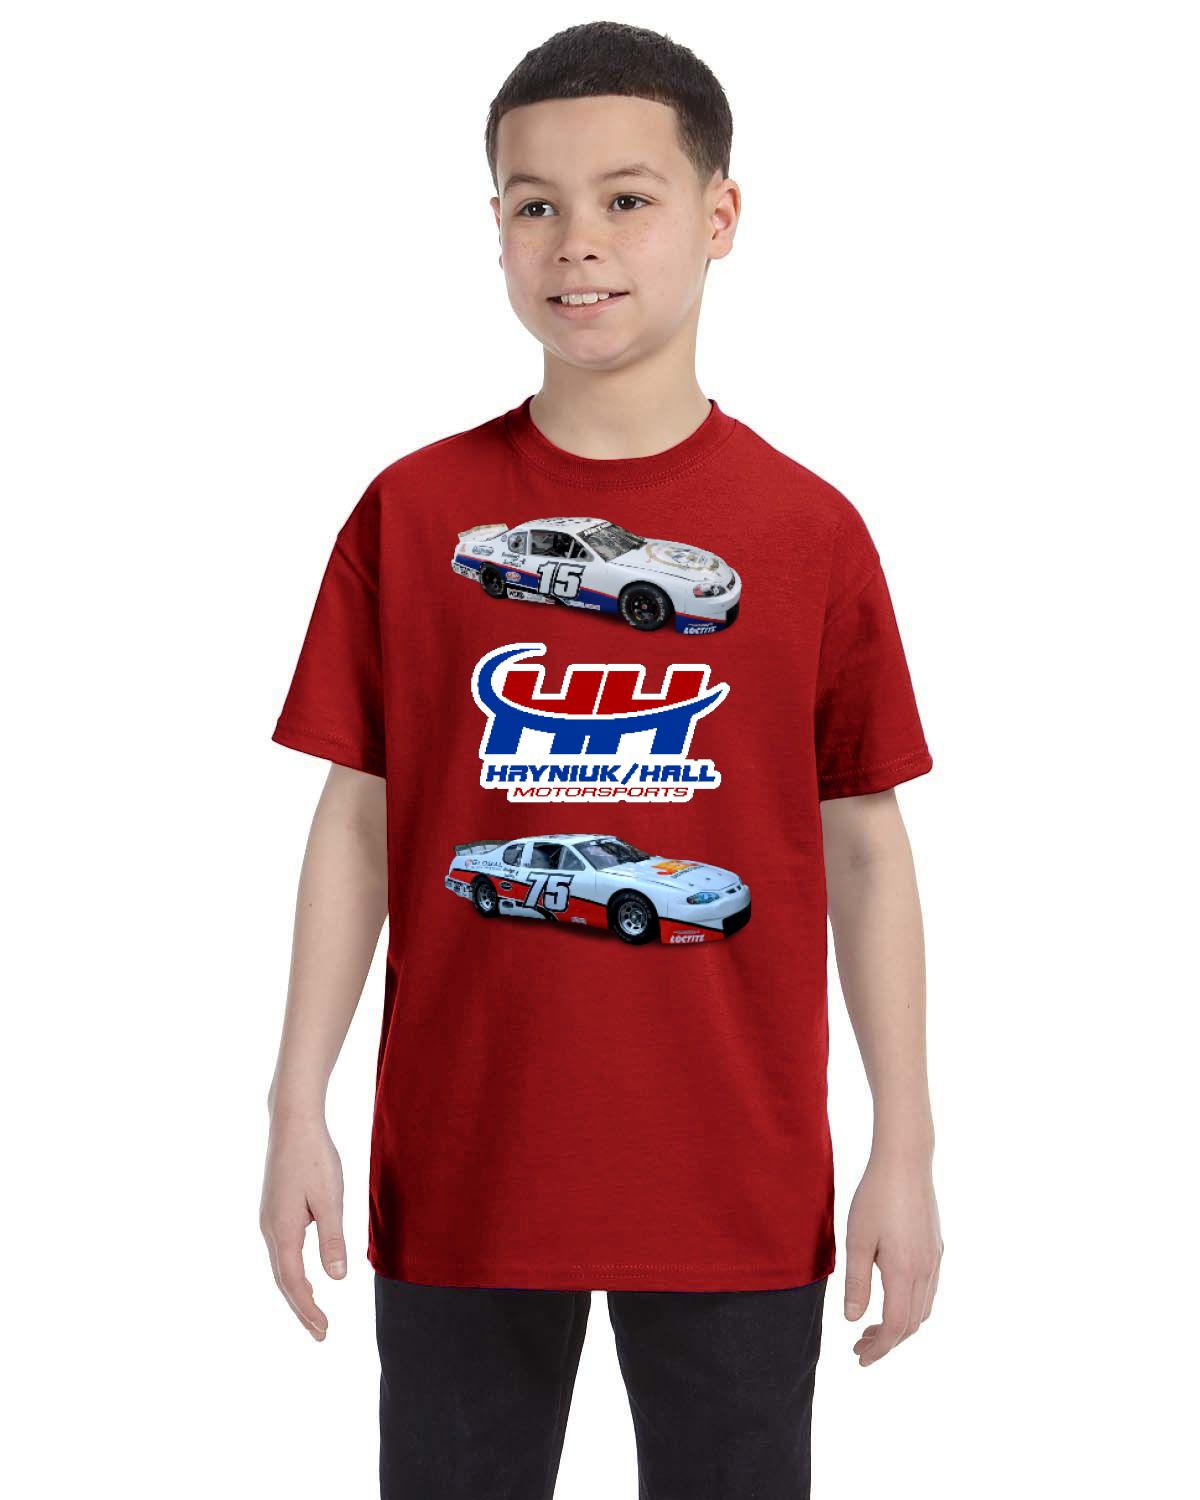 Hryniuk / Hall Motorsports Youth Tshirt